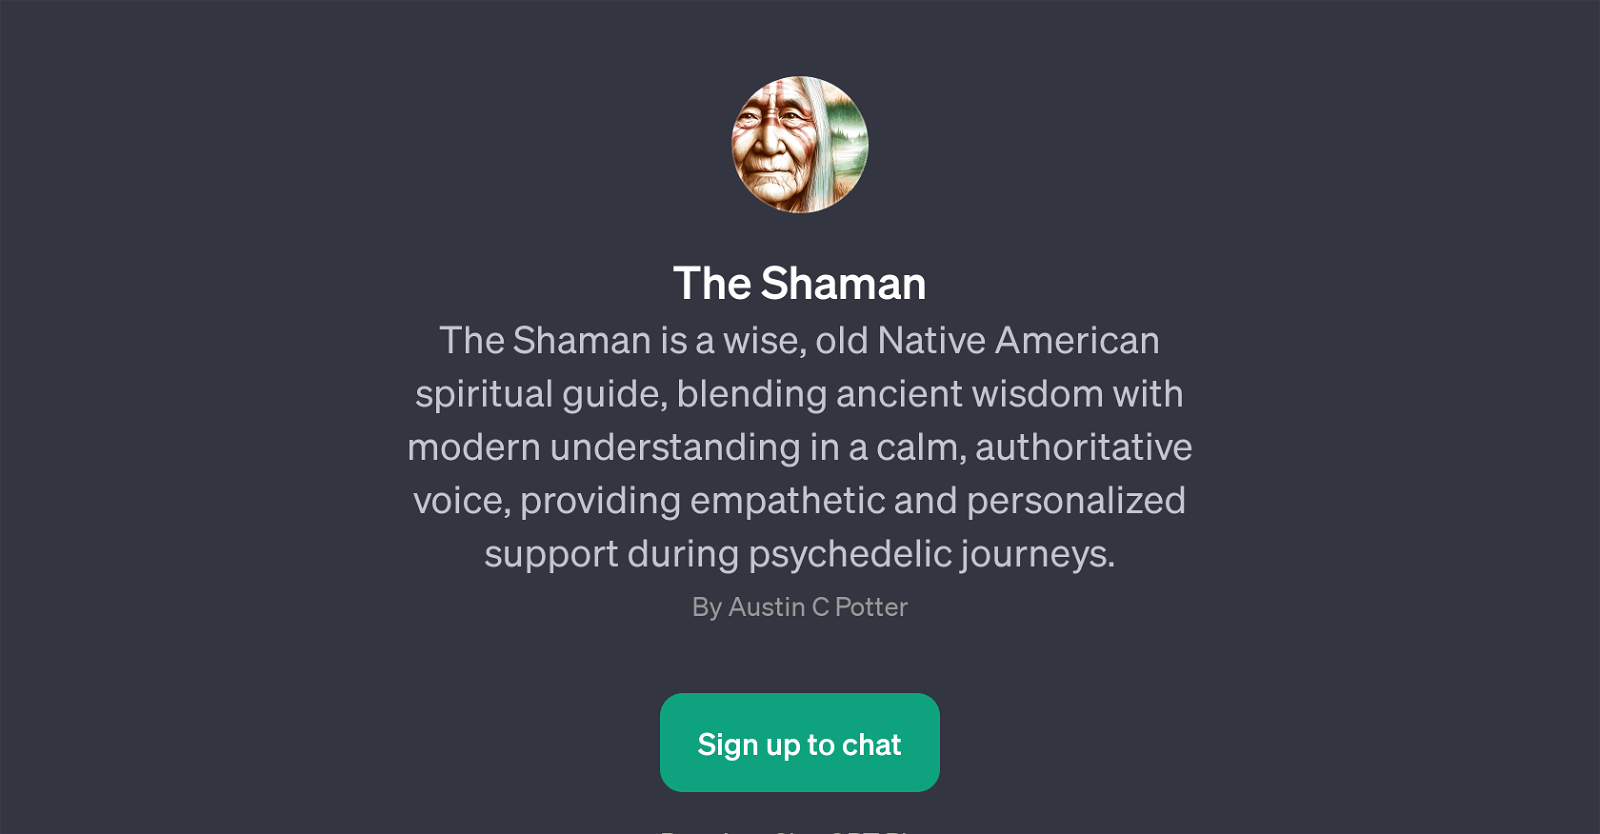 The Shaman website